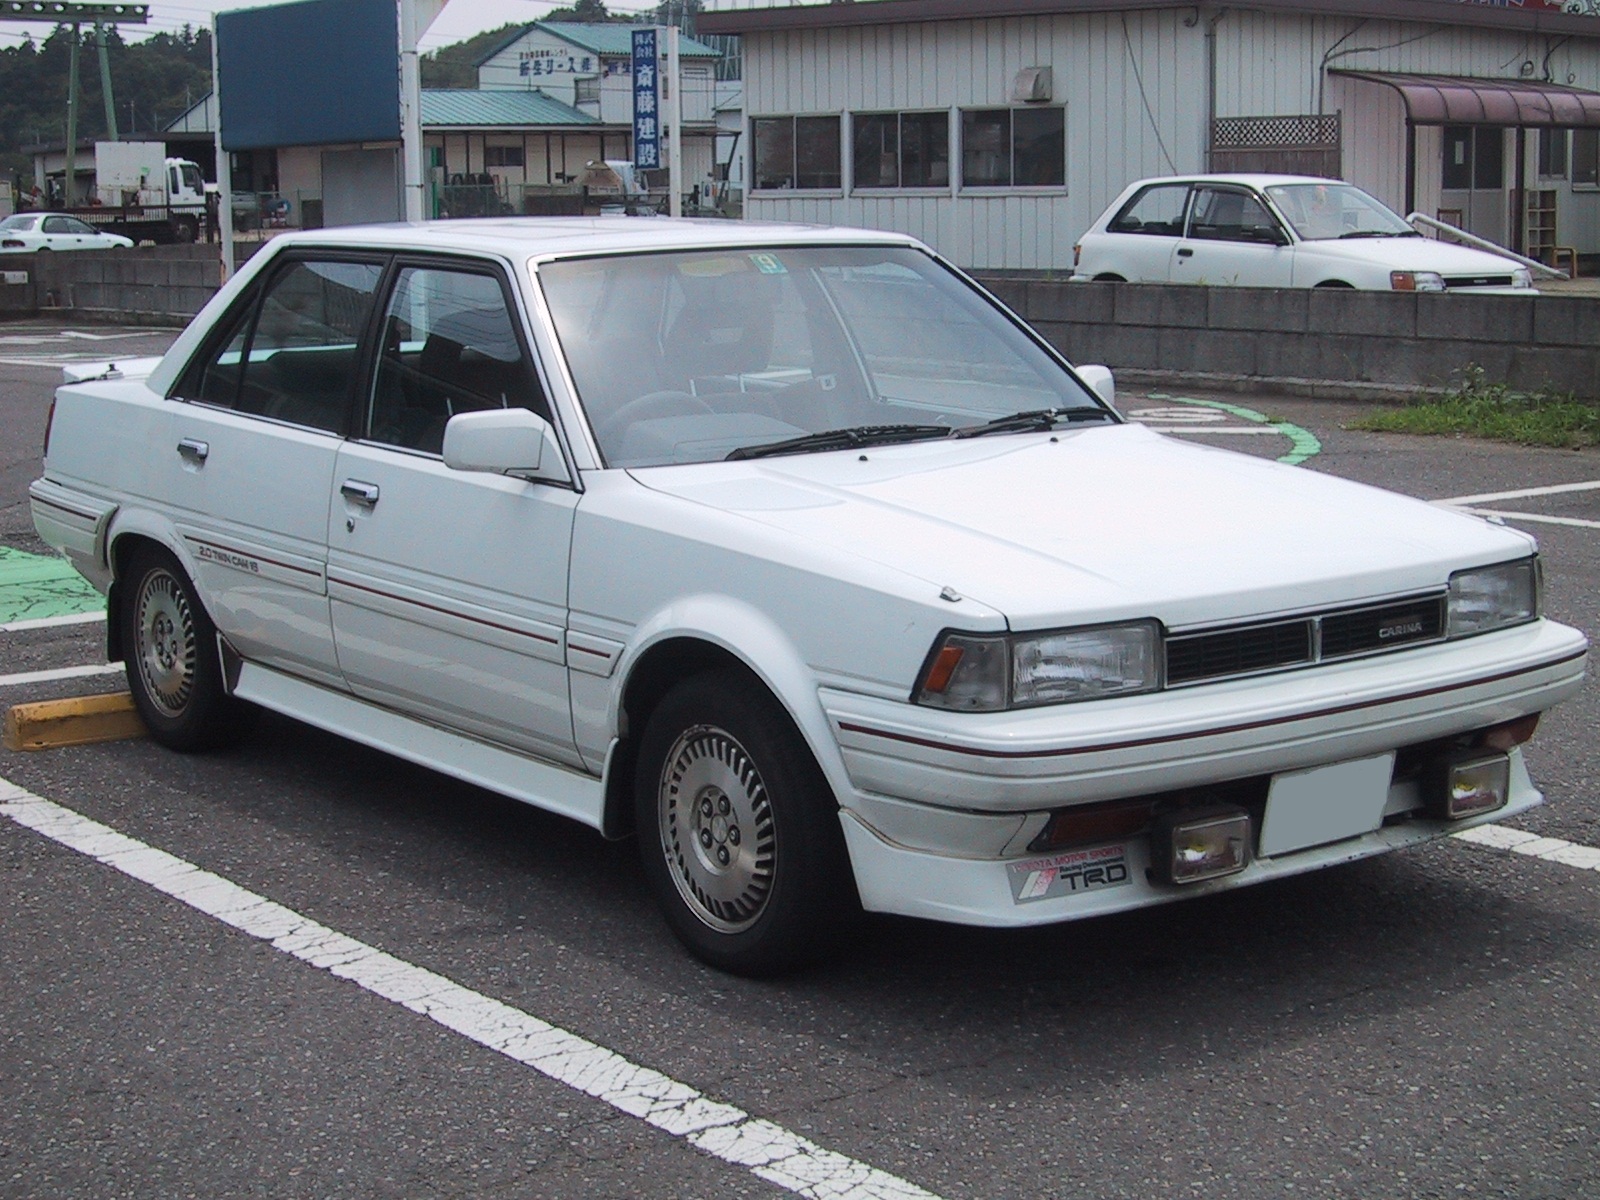 File:Toyota carina st162.jpg - Wikimedia Commons